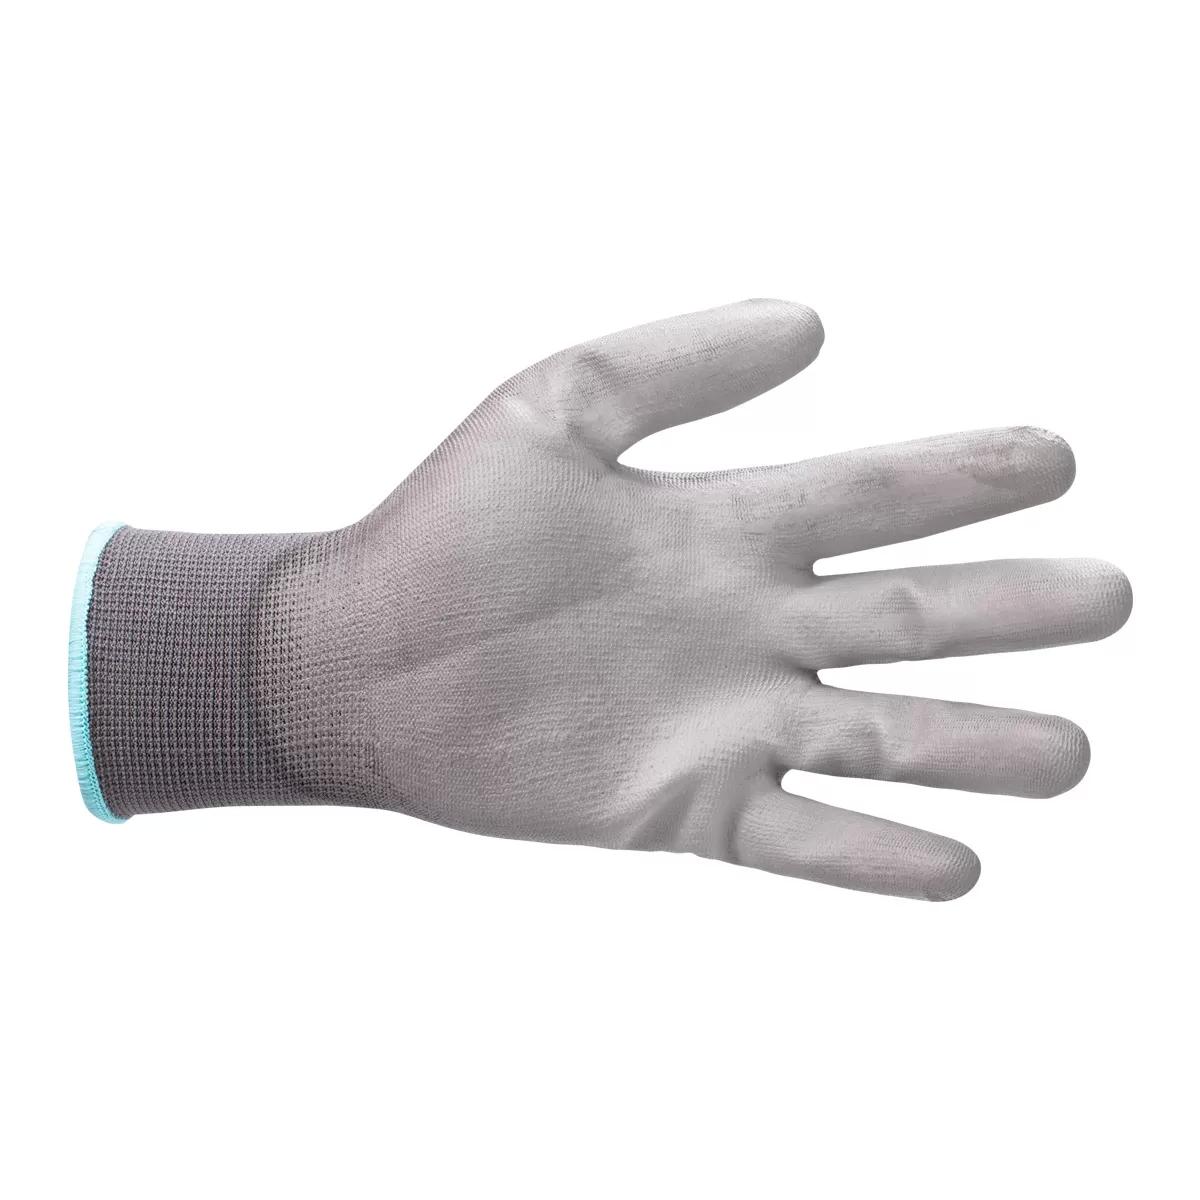 Gloves Bunter gray 